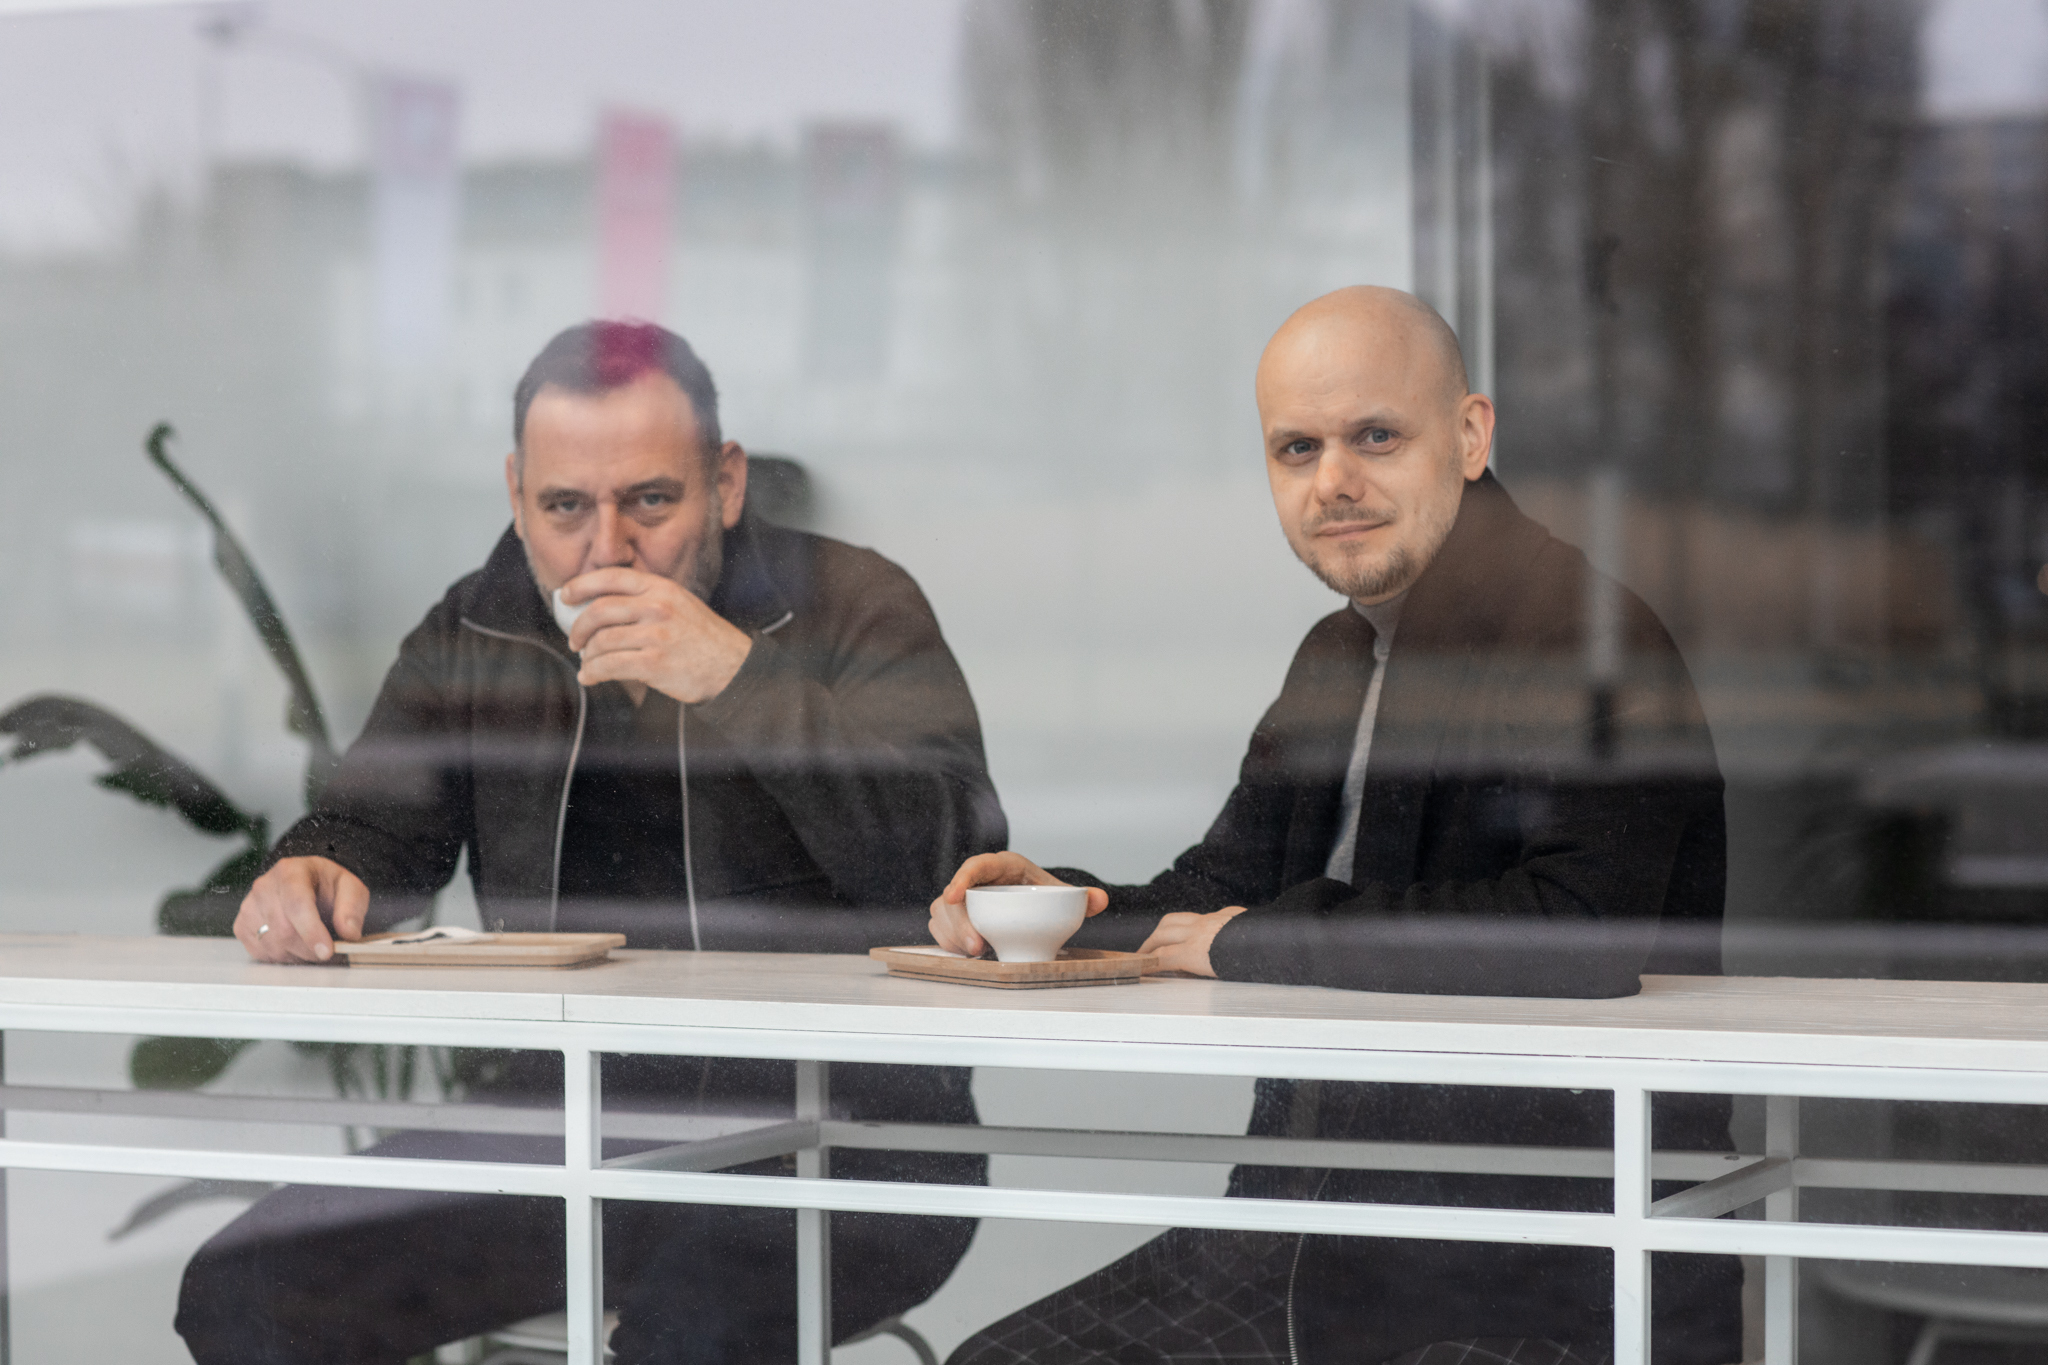 Linker Cloud founders: Daniel Kierdal and Wojciech Ciolko.